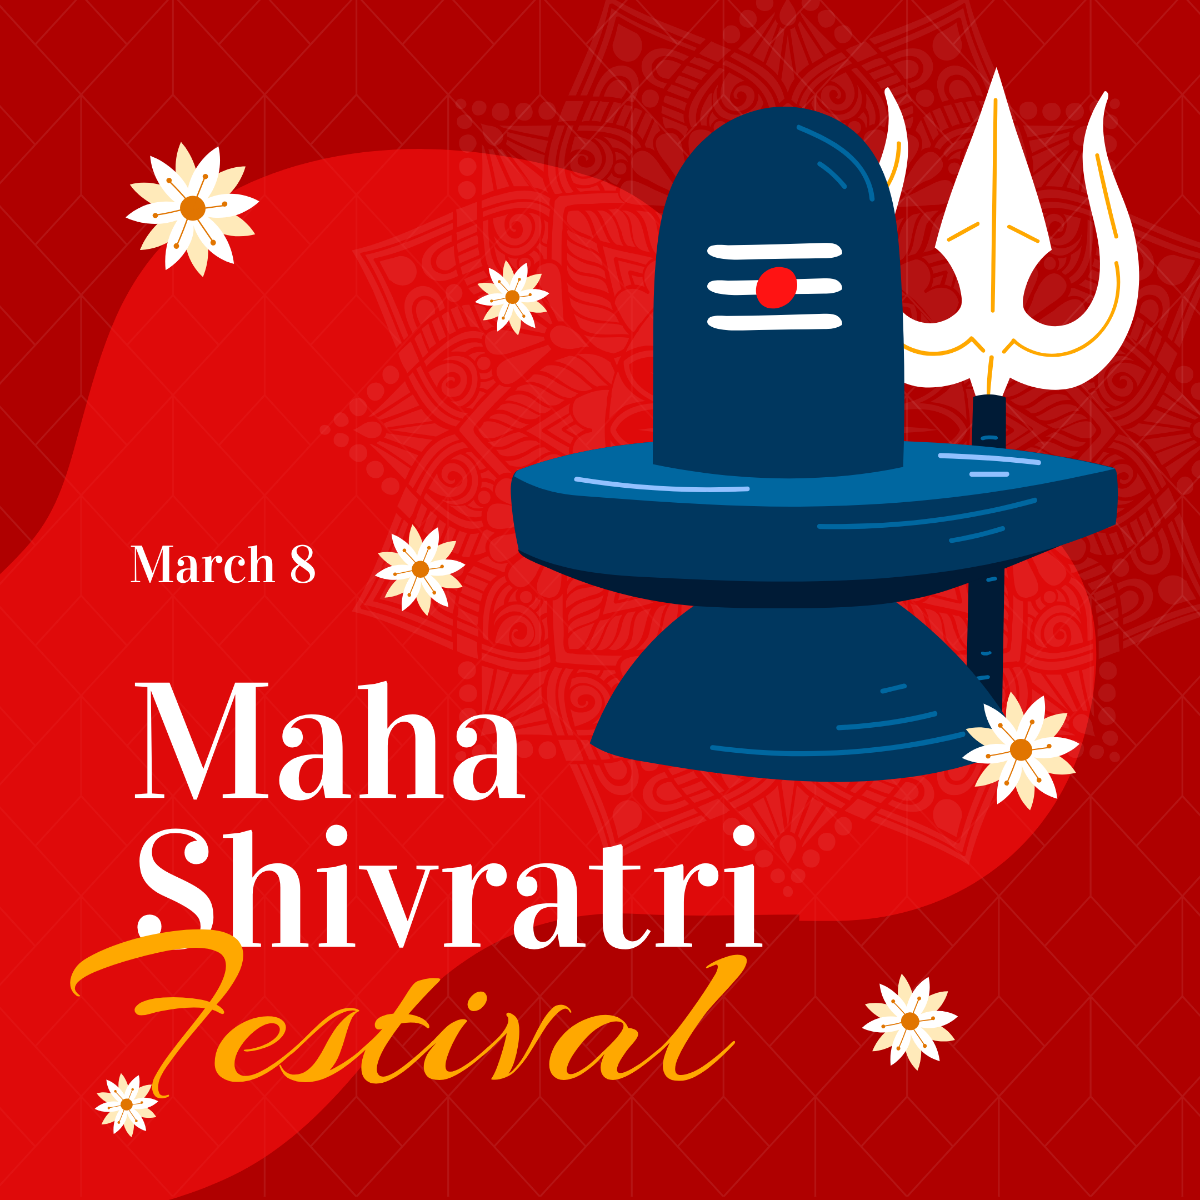 Maha Shivratri Festival Instagram Post Template